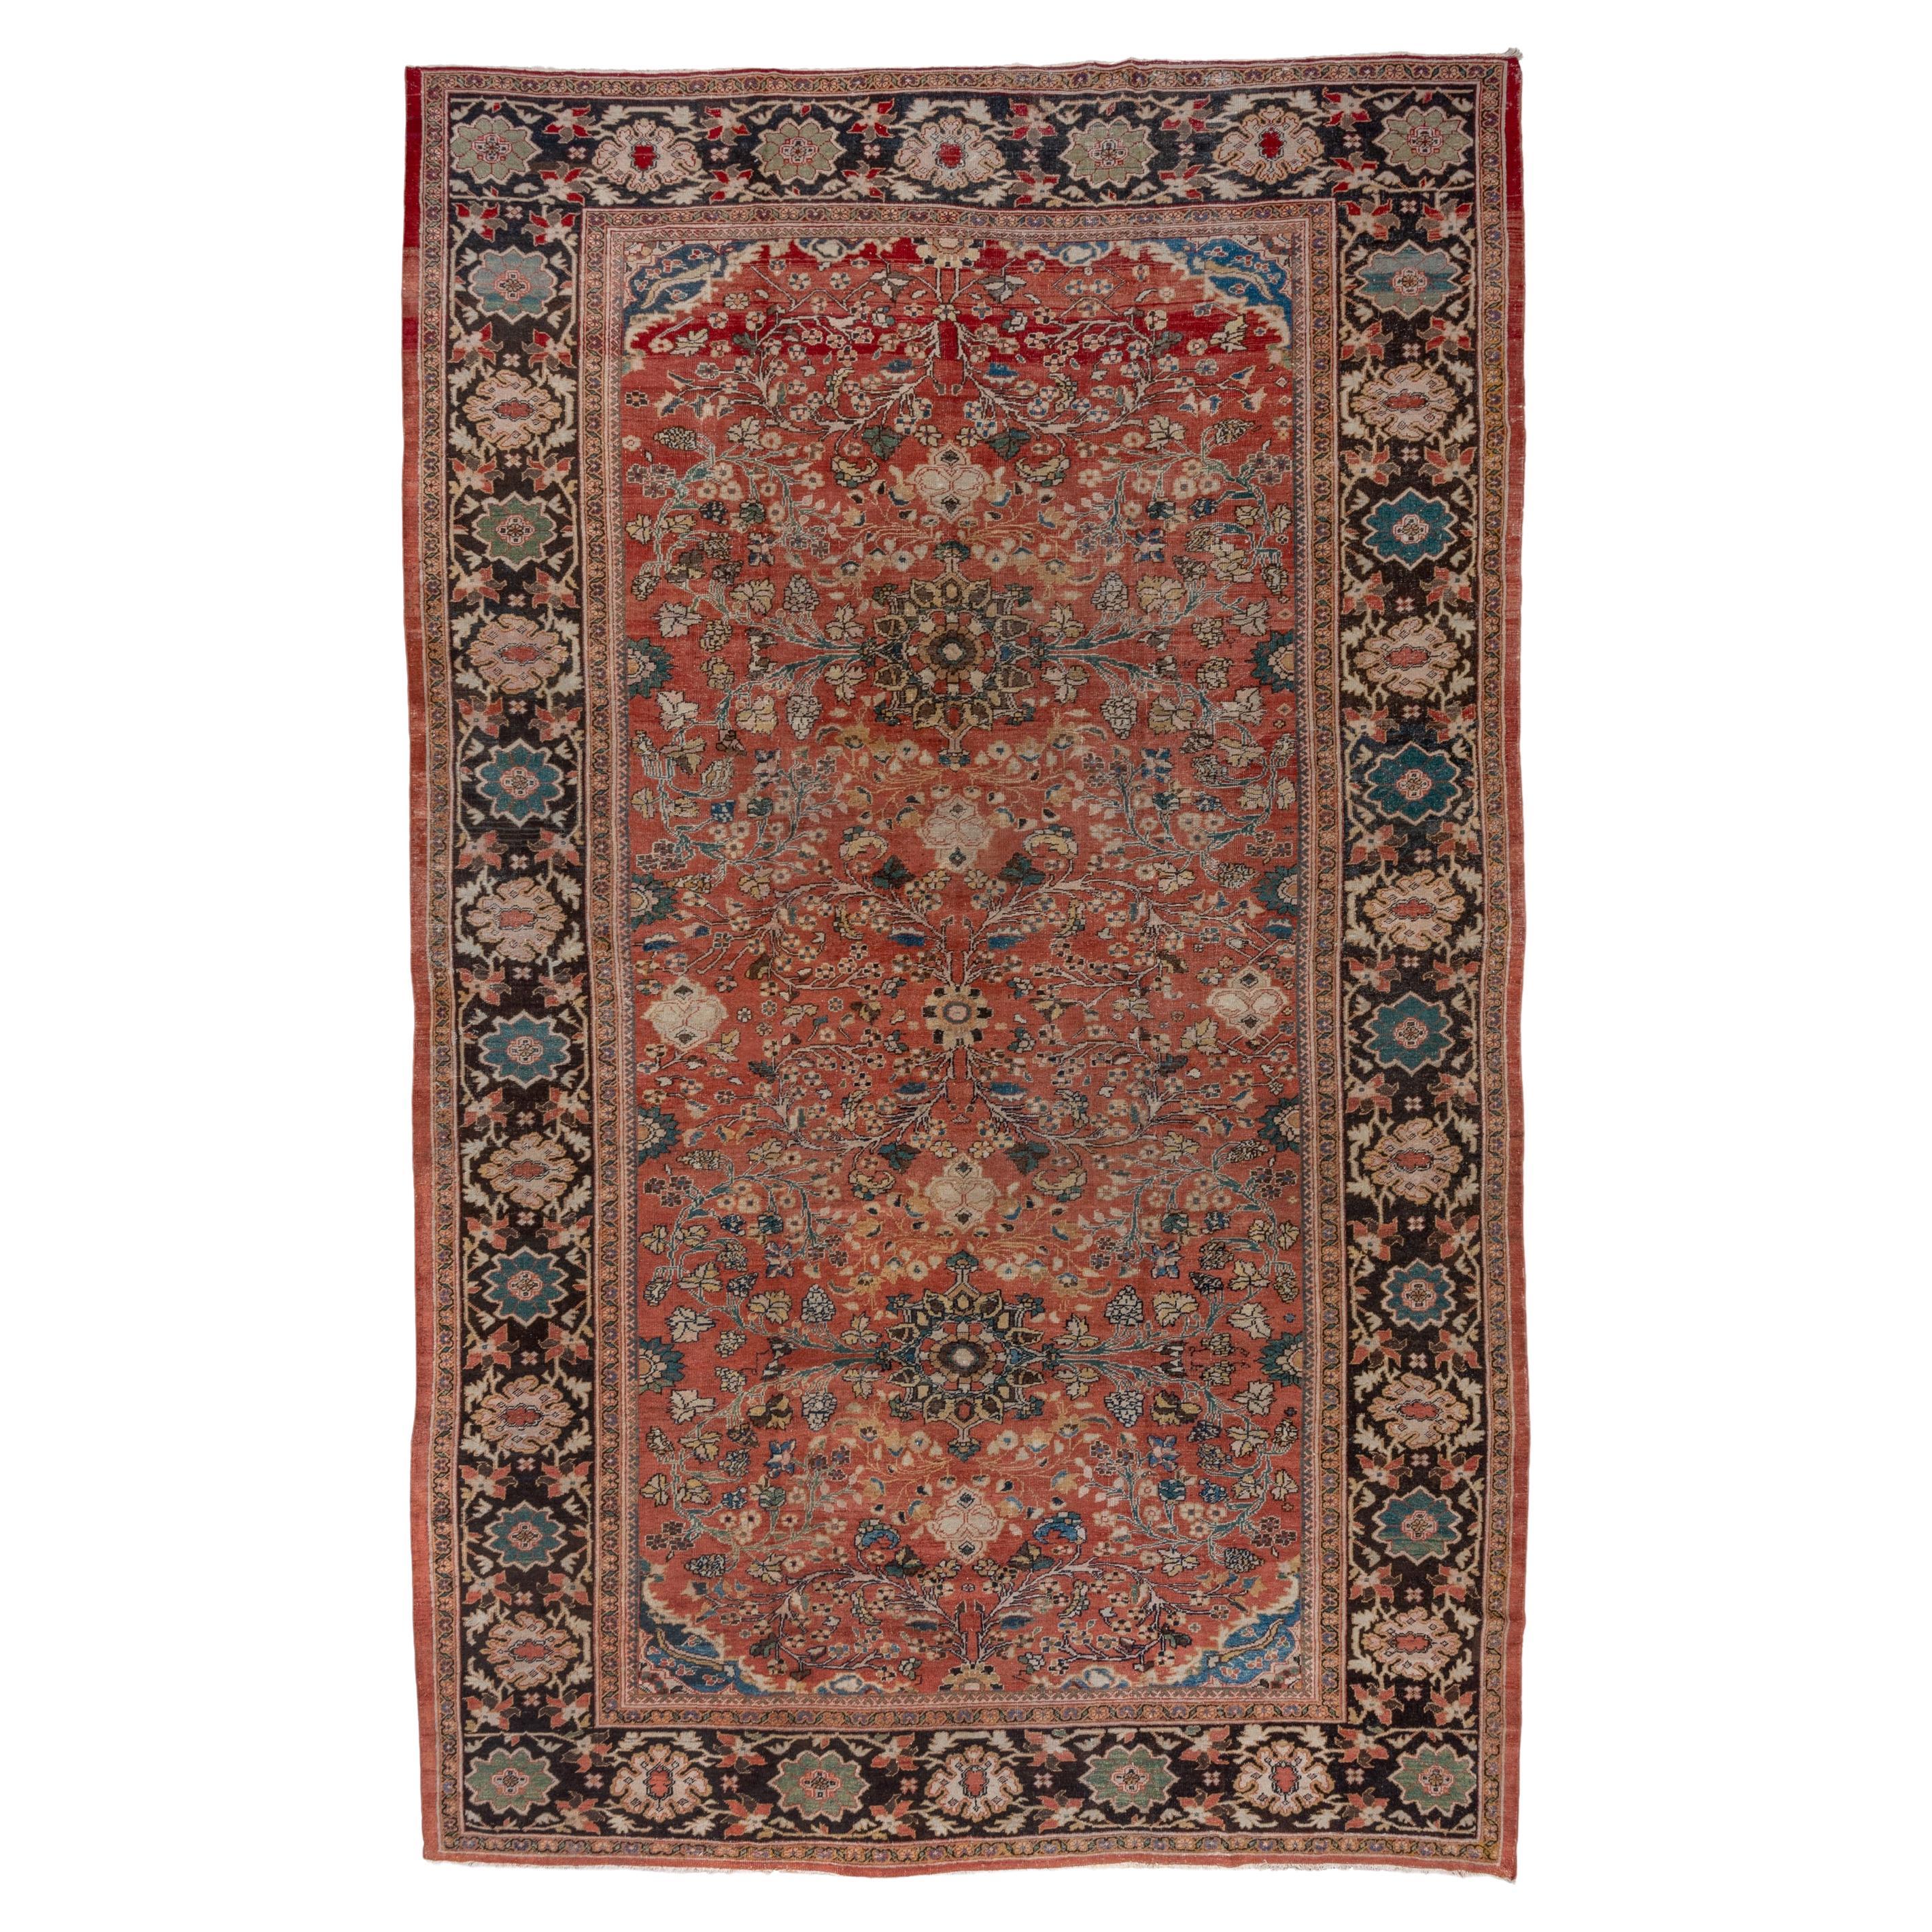 Finely Woven Antique Persian Sultanabad Carpet, Rust Allover Field, circa 1910s